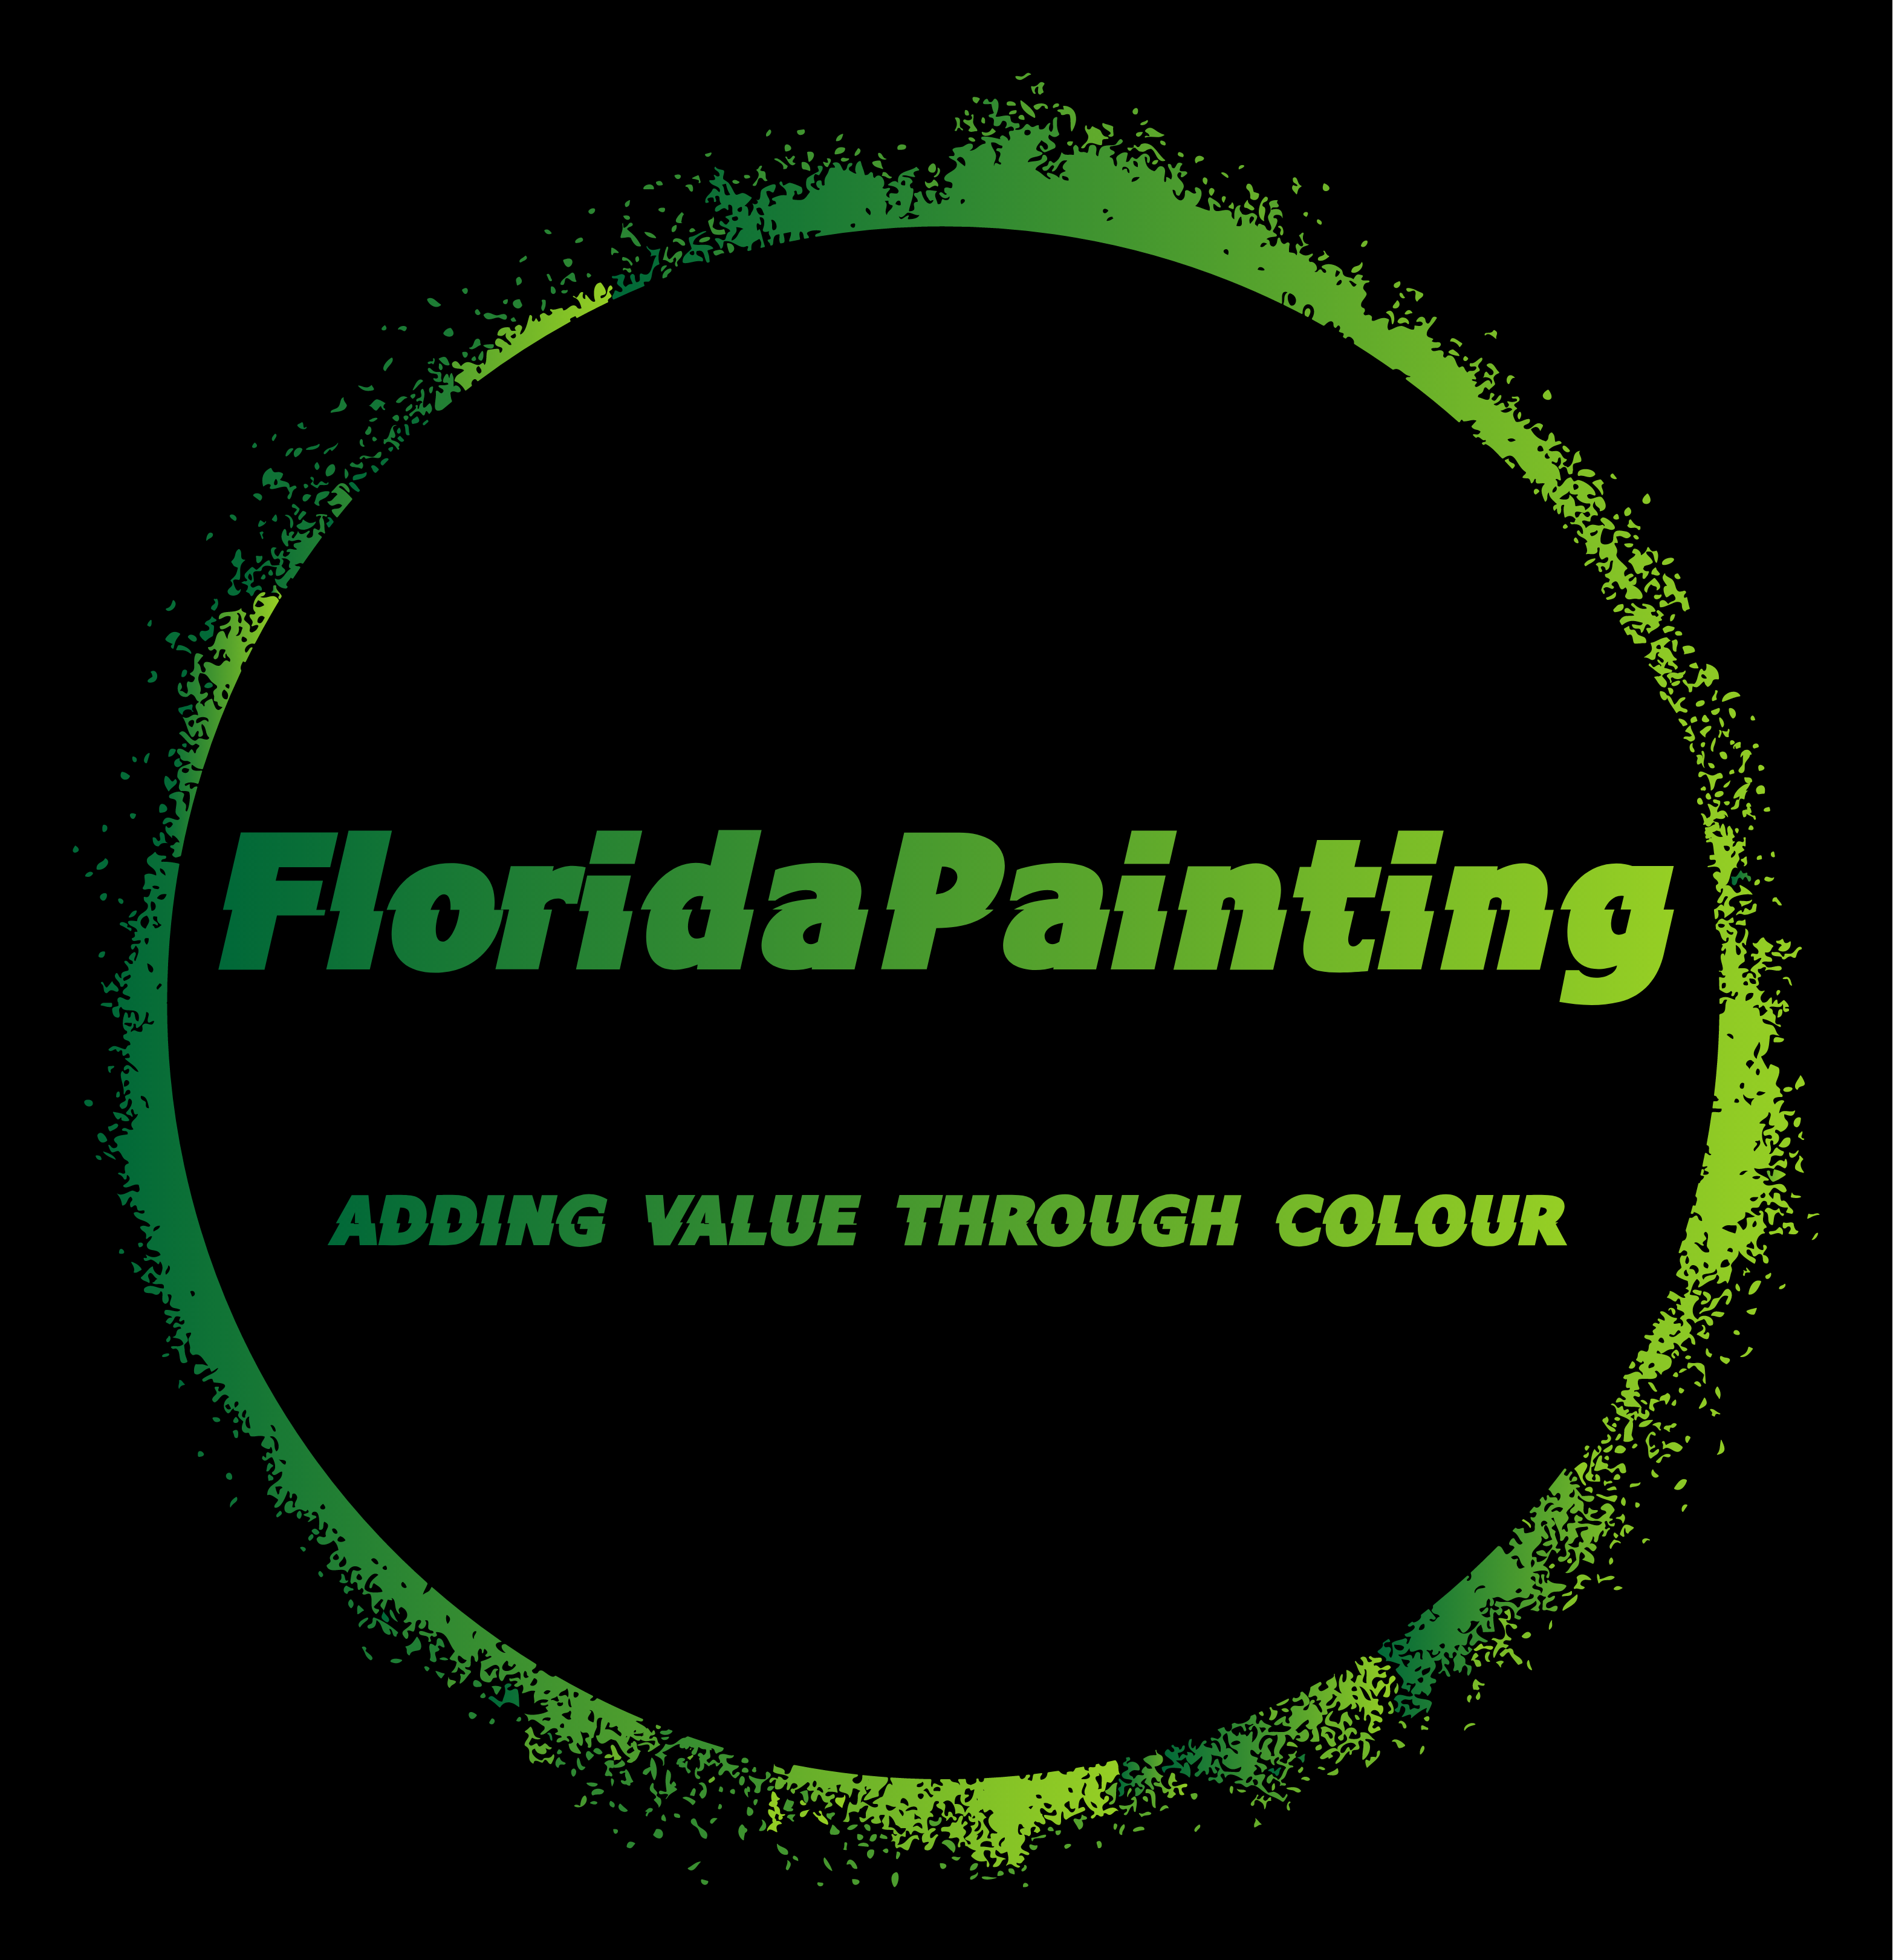 Florida Painting's logo